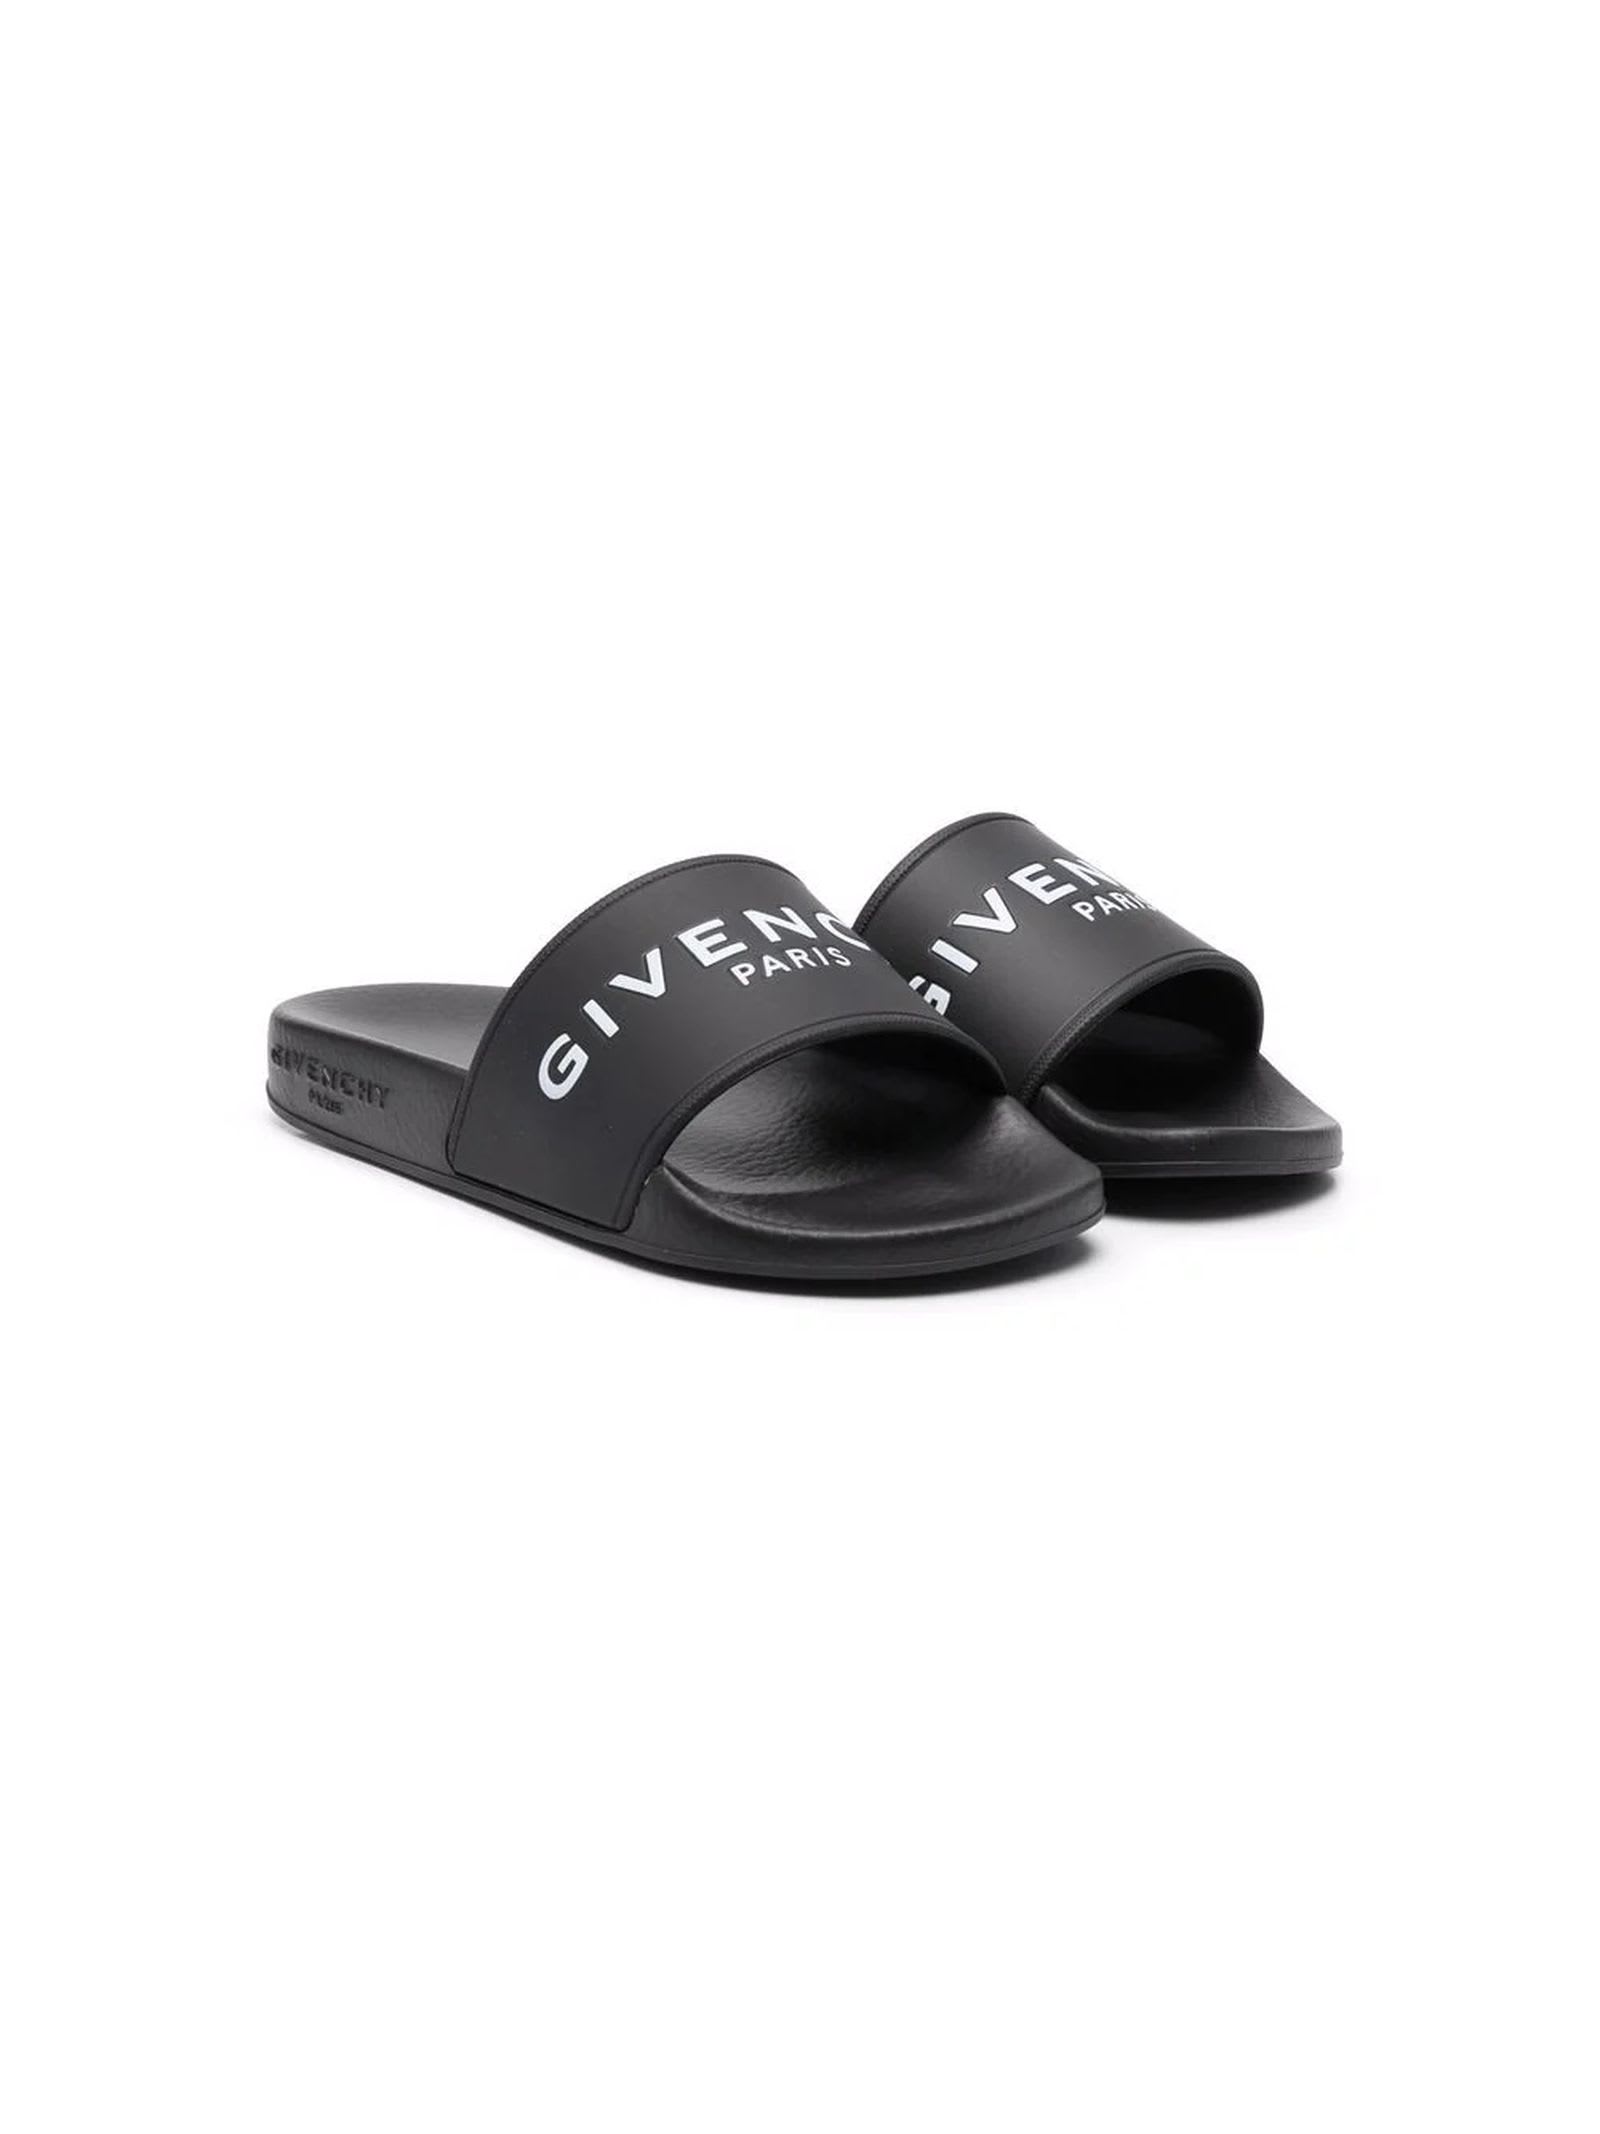 Givenchy Black Pvc Slippers